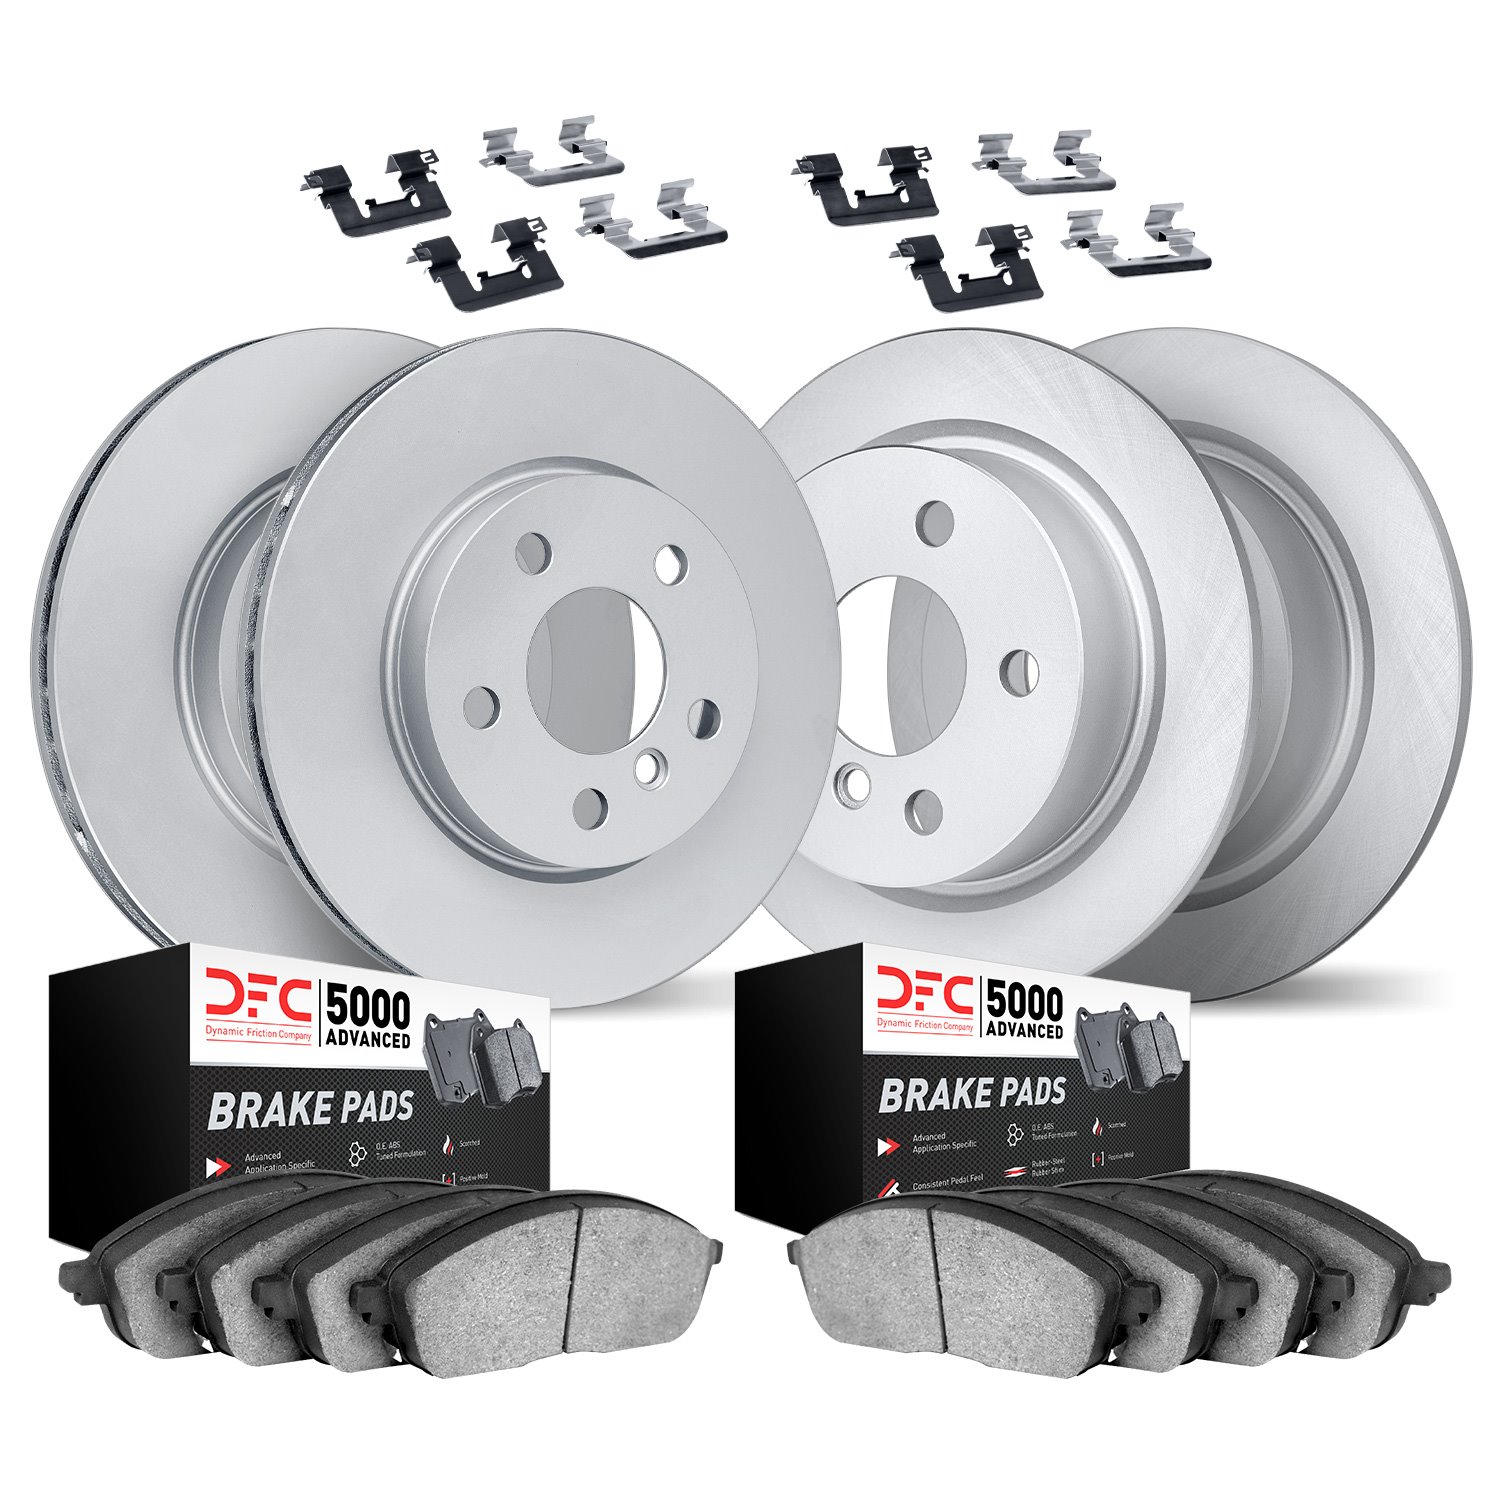 9514-32010 GEOMET Brake Rotors w/5000 Advanced Brake Pads Kit & Hardware, Fits Select Mini, Position: Front and Rear